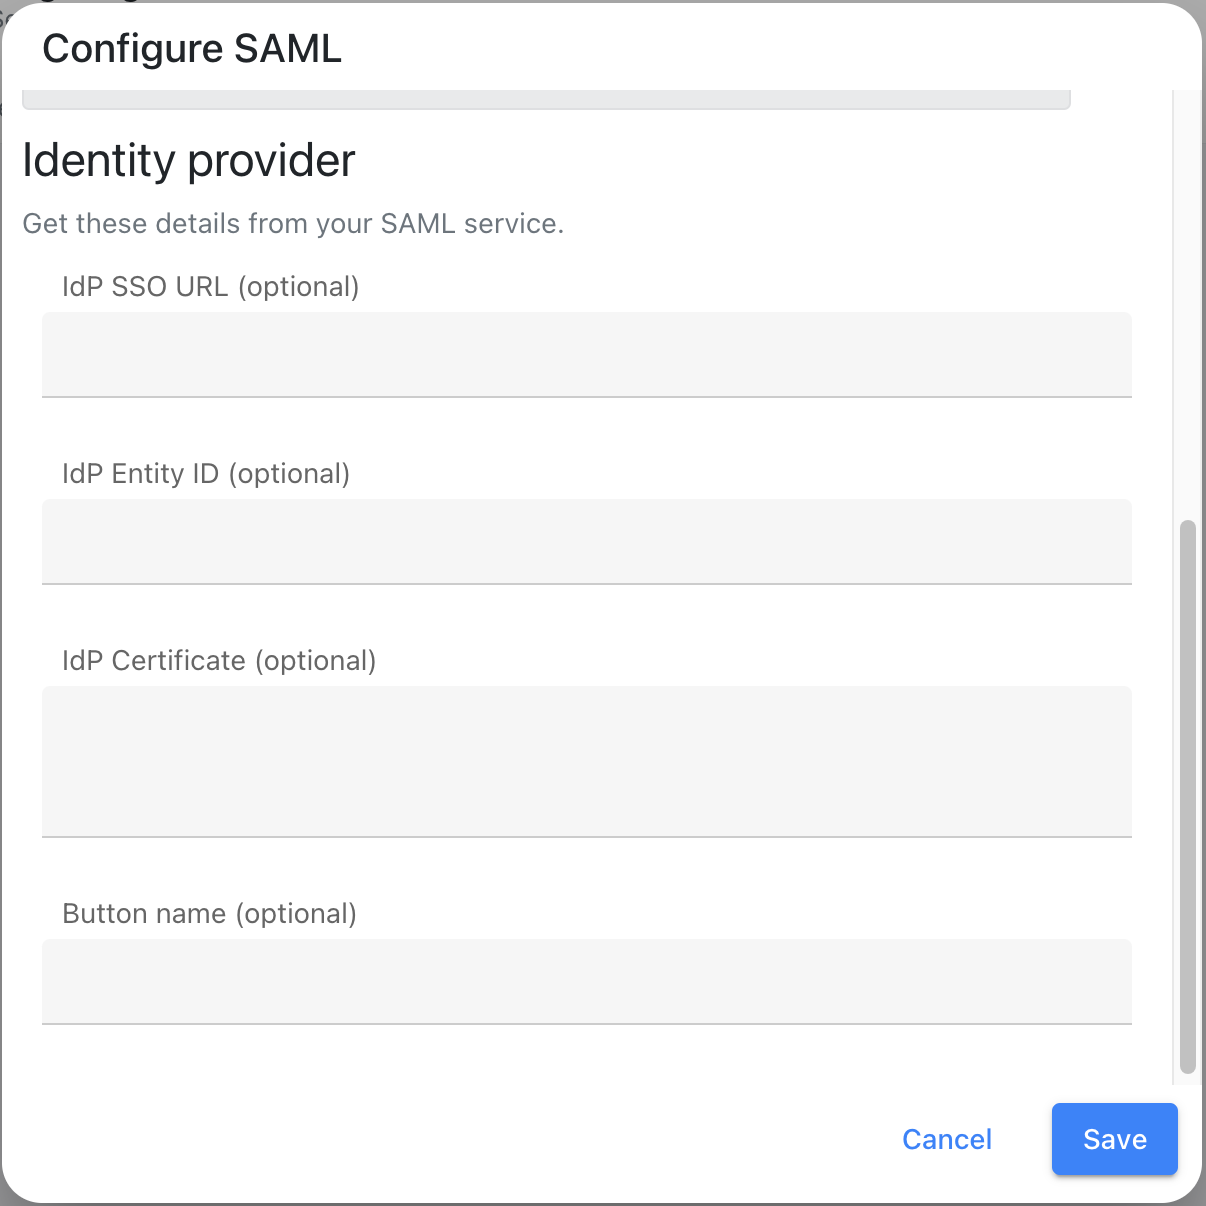 Configure SAML dialog